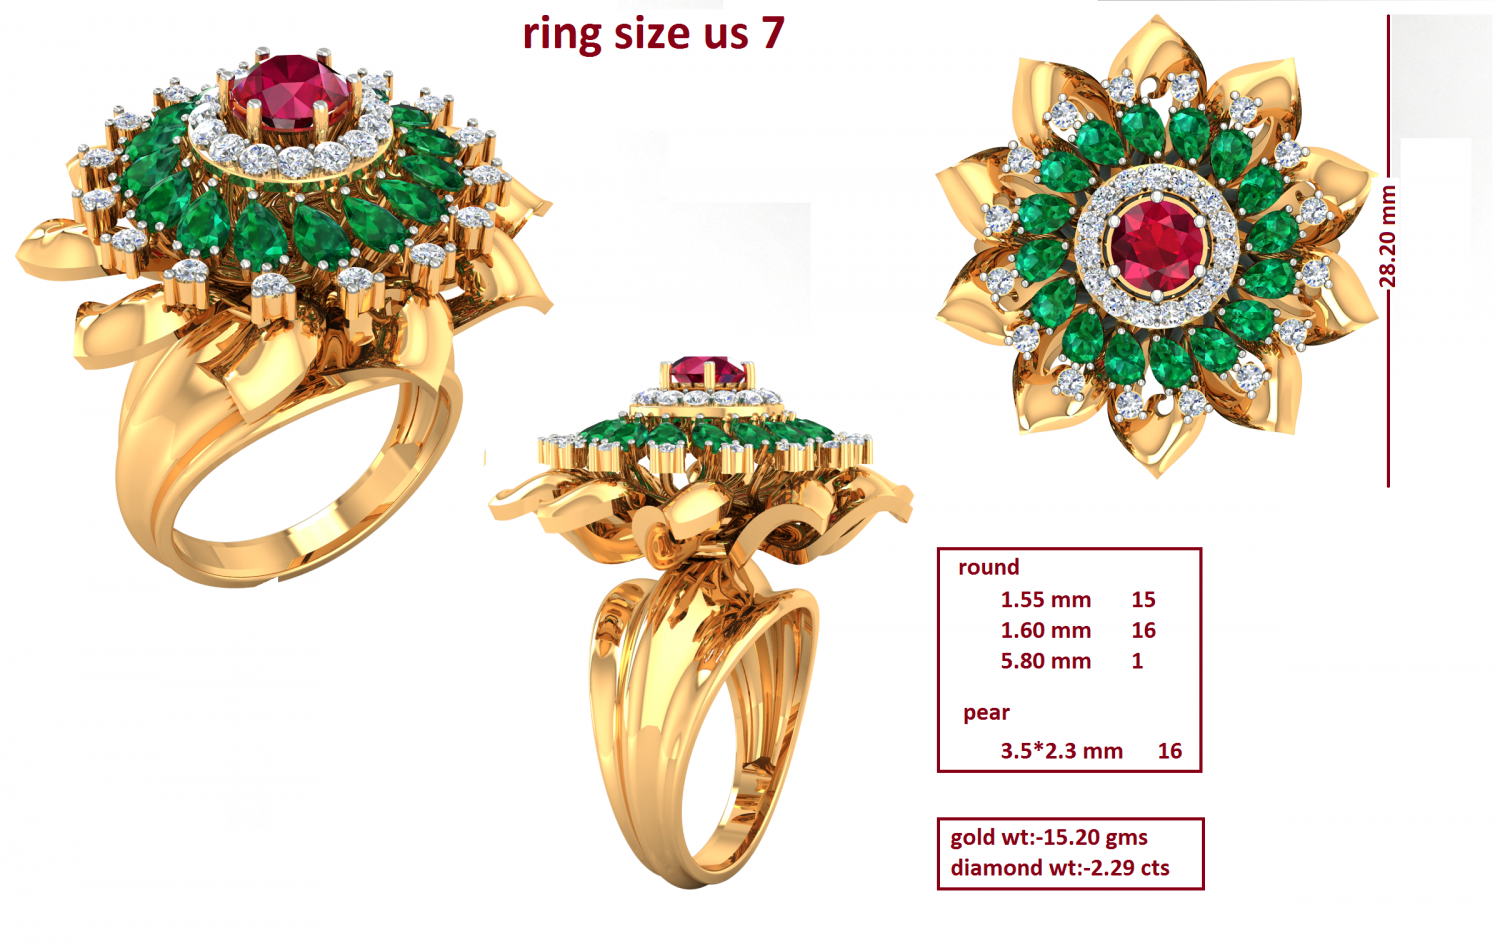 22kt 916 BIS HM Solid Rings DM on WhatsApp for order 8147195223 DM us for  more details @ratan.jewels Admin @bang.bang.2k1 #pendant ... | Instagram